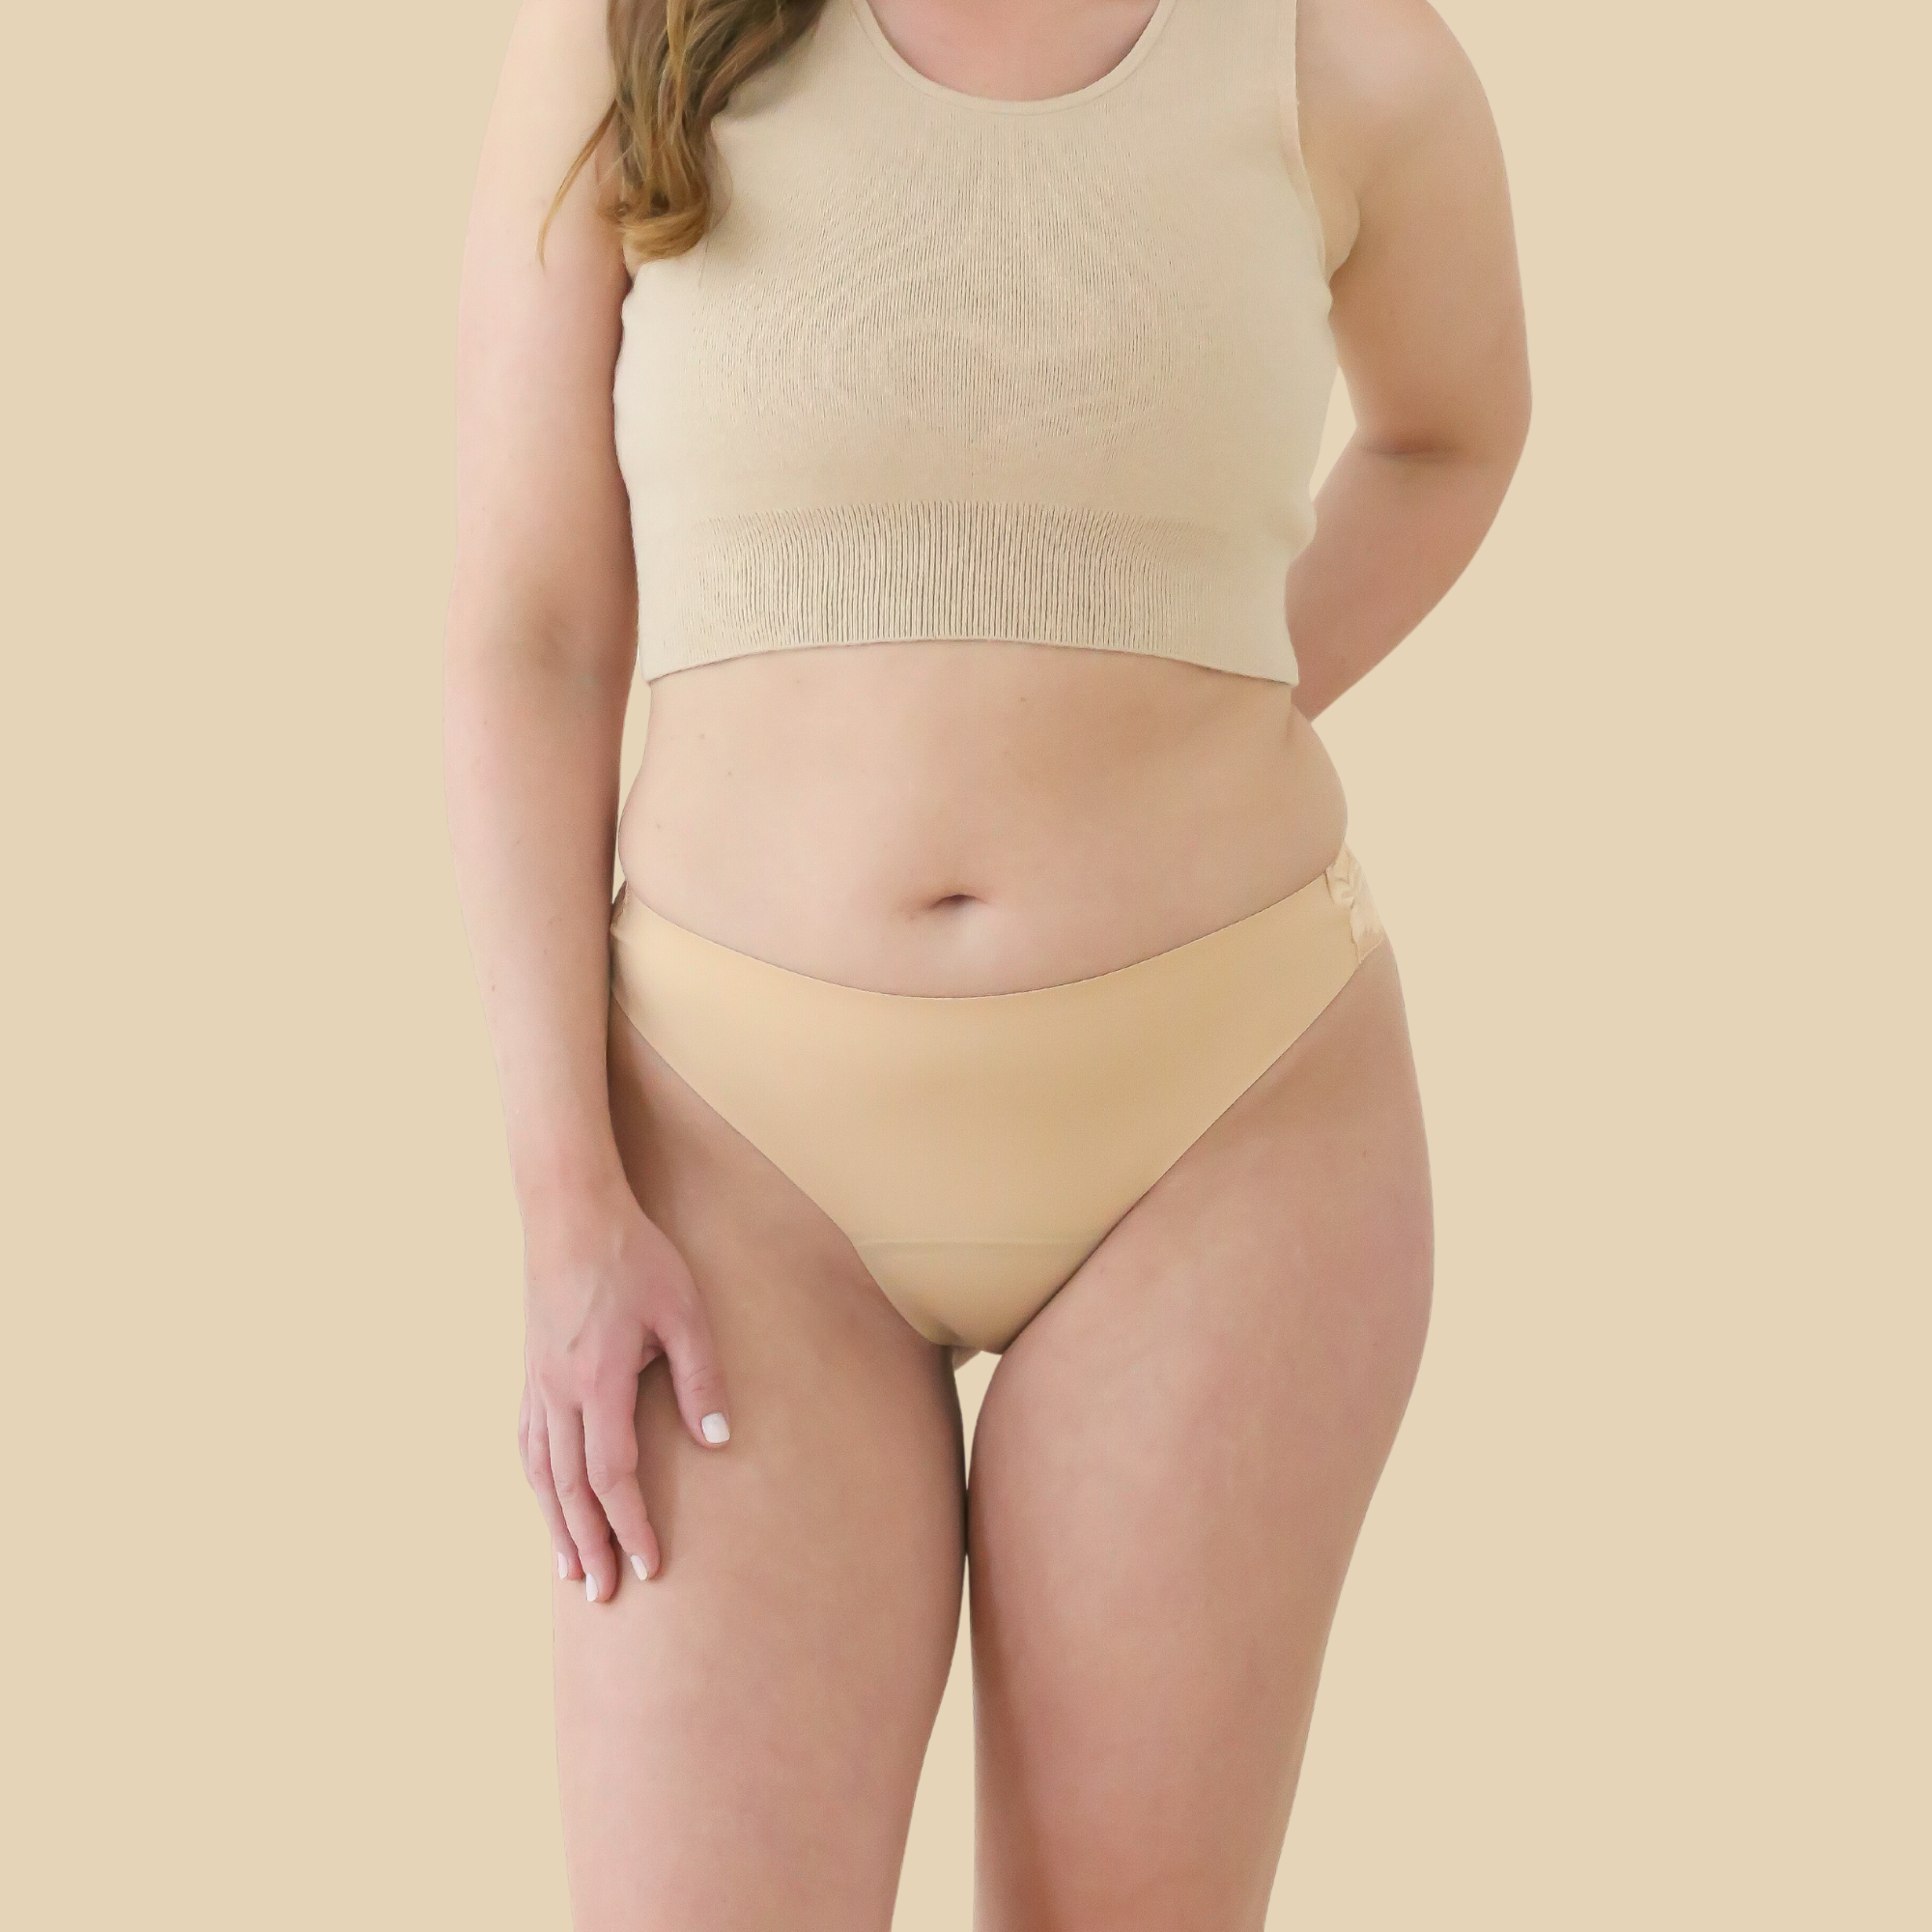 New Type Lace Brazilian Ladies Underwear Seamless Panties Thong